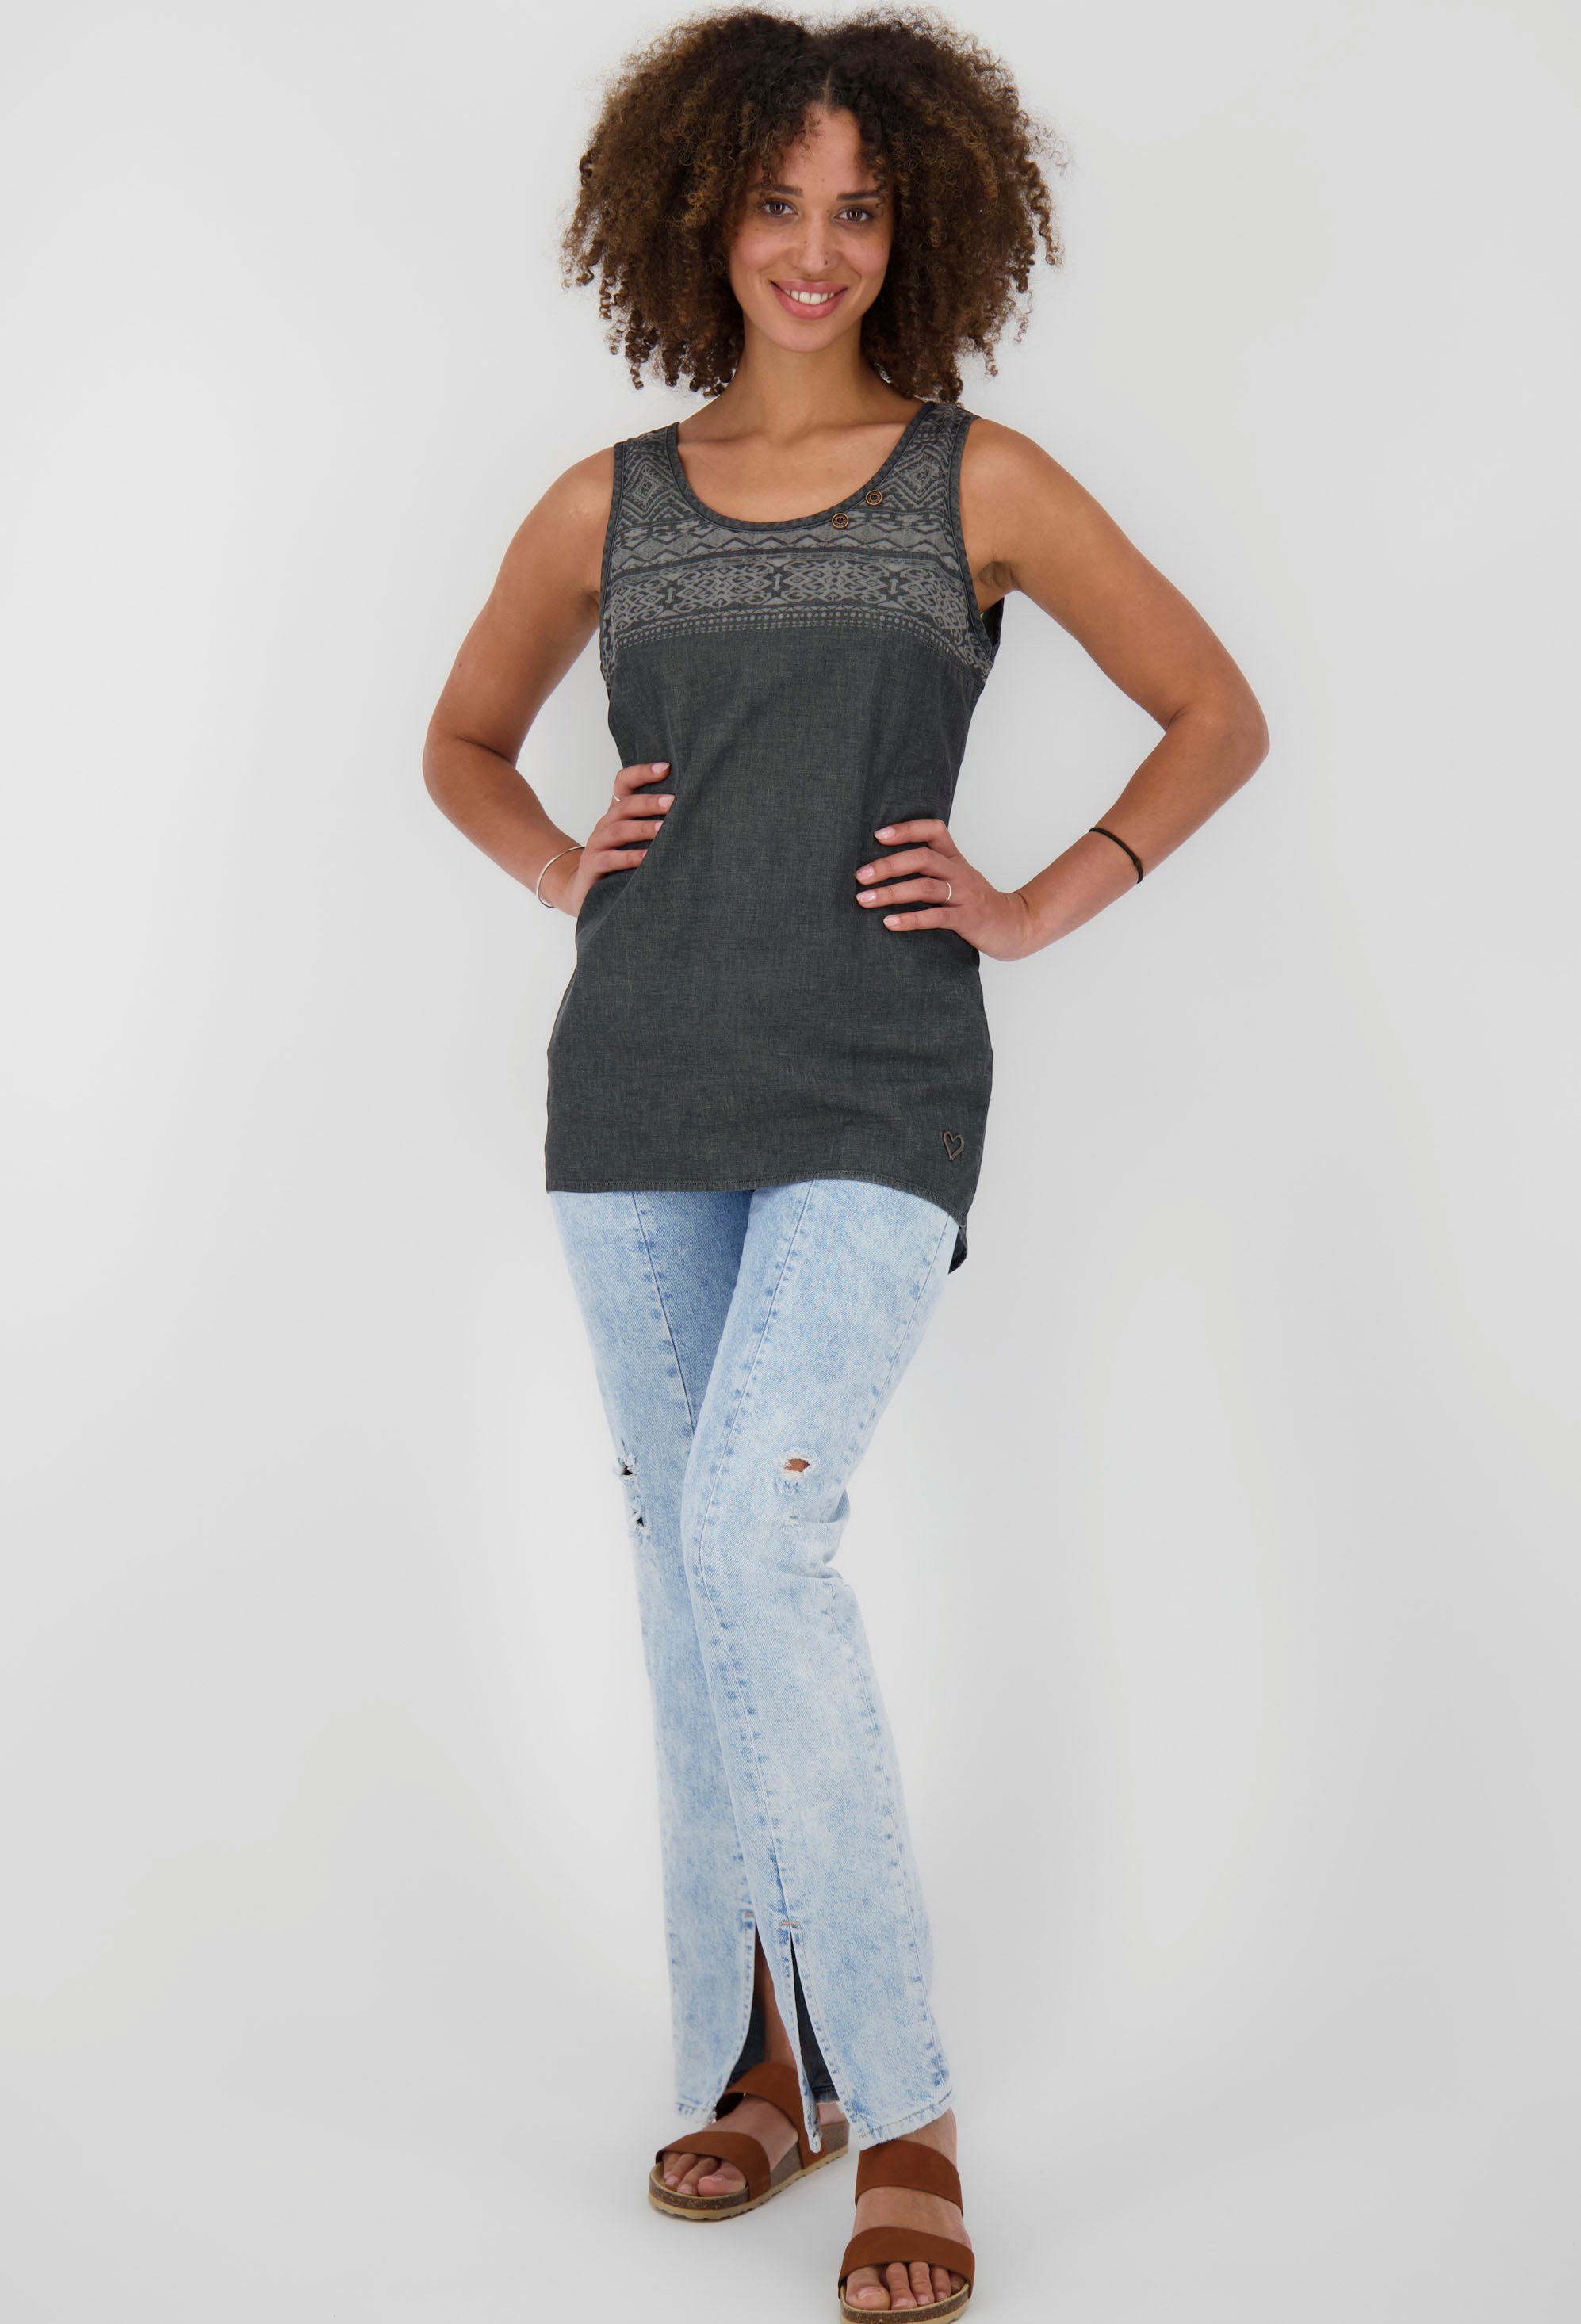 Alife & Print Jeansbluse in Print print feminines denim black Kickin CarliAK Denim-Top mit Spitzen-Optik, Stretch-Qualität